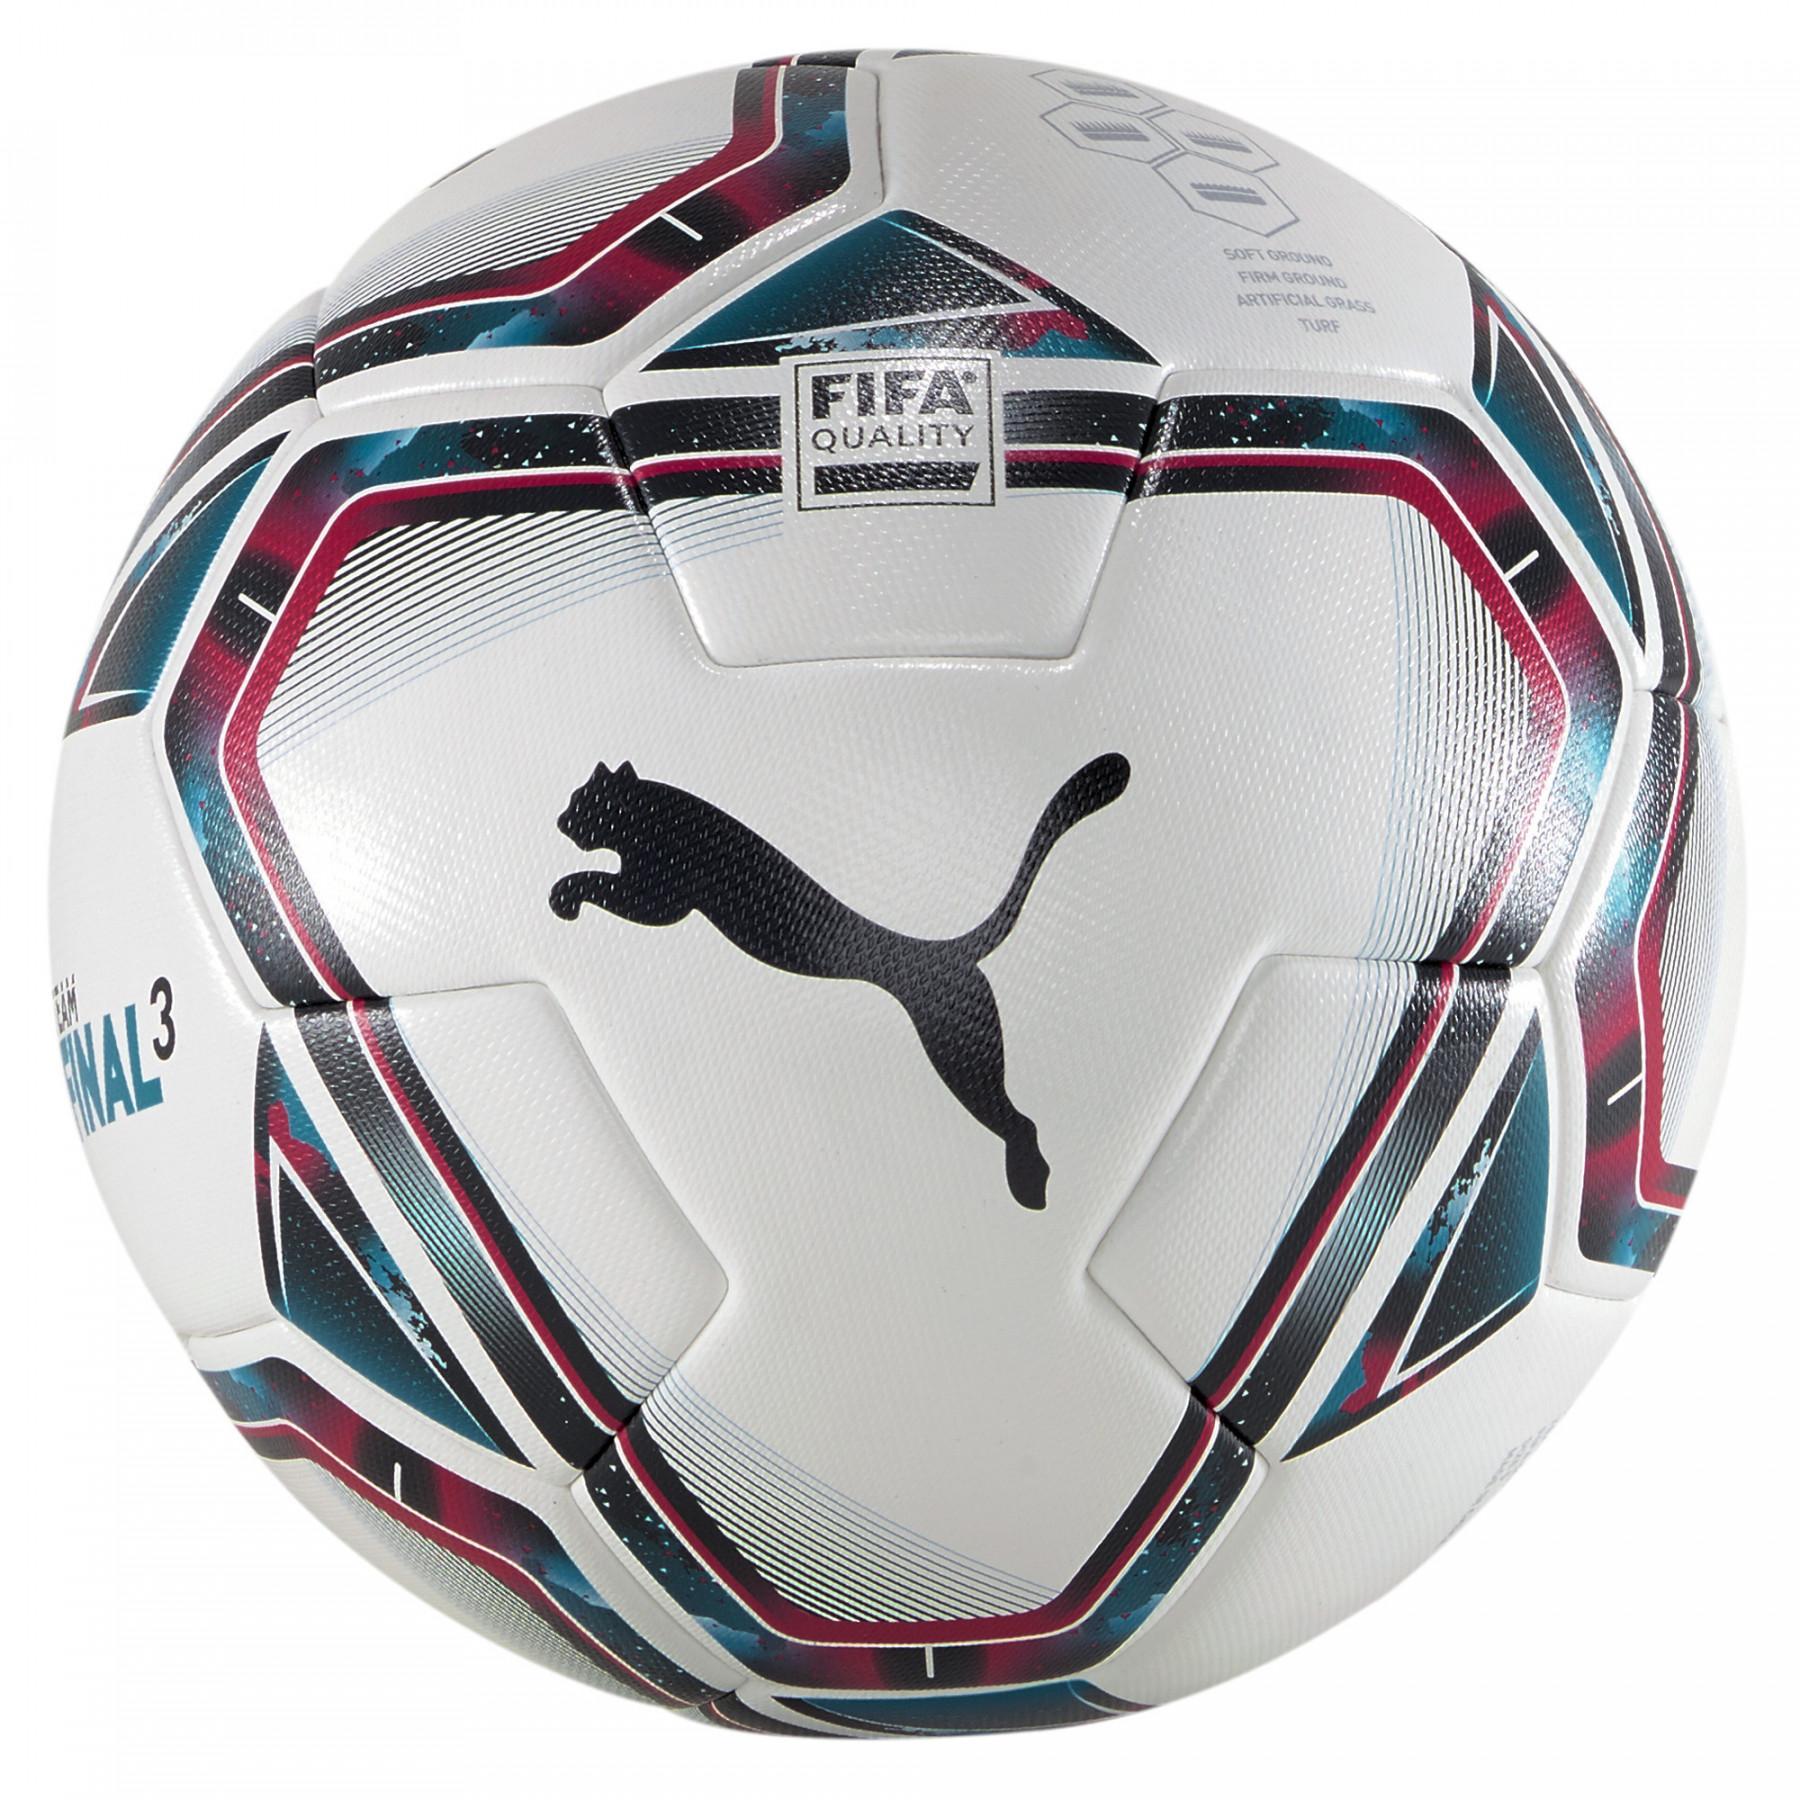 Ballon Puma Final 3 Fifa Quality